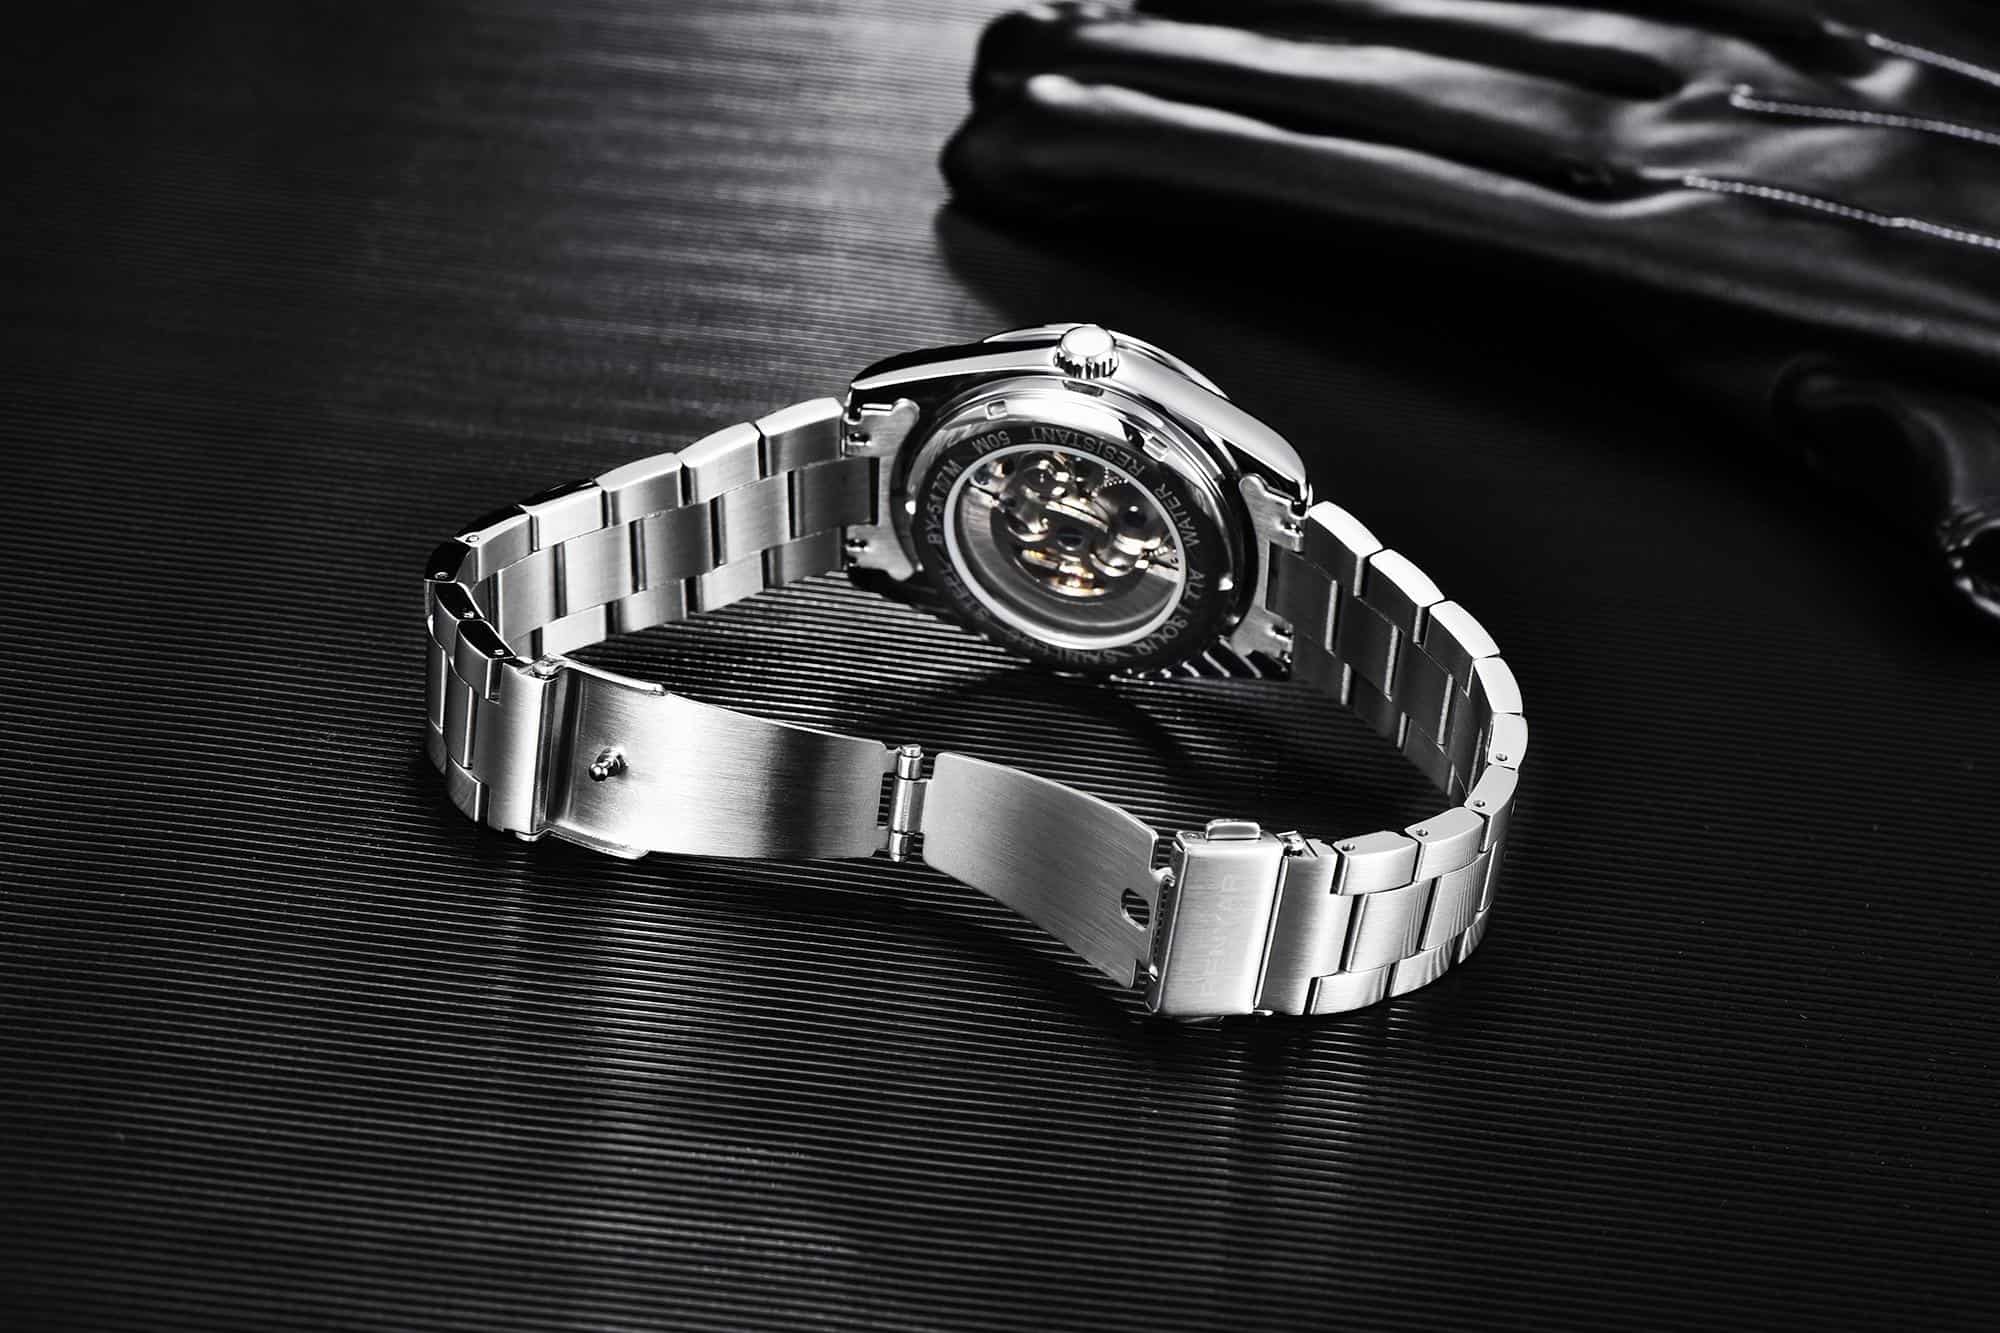 BENYAR 2021 New Men Automatic Mechanical Watch Top Brand Men's Watches Fashion Waterproof Sport Watch Mens Watches Reloj Hombre